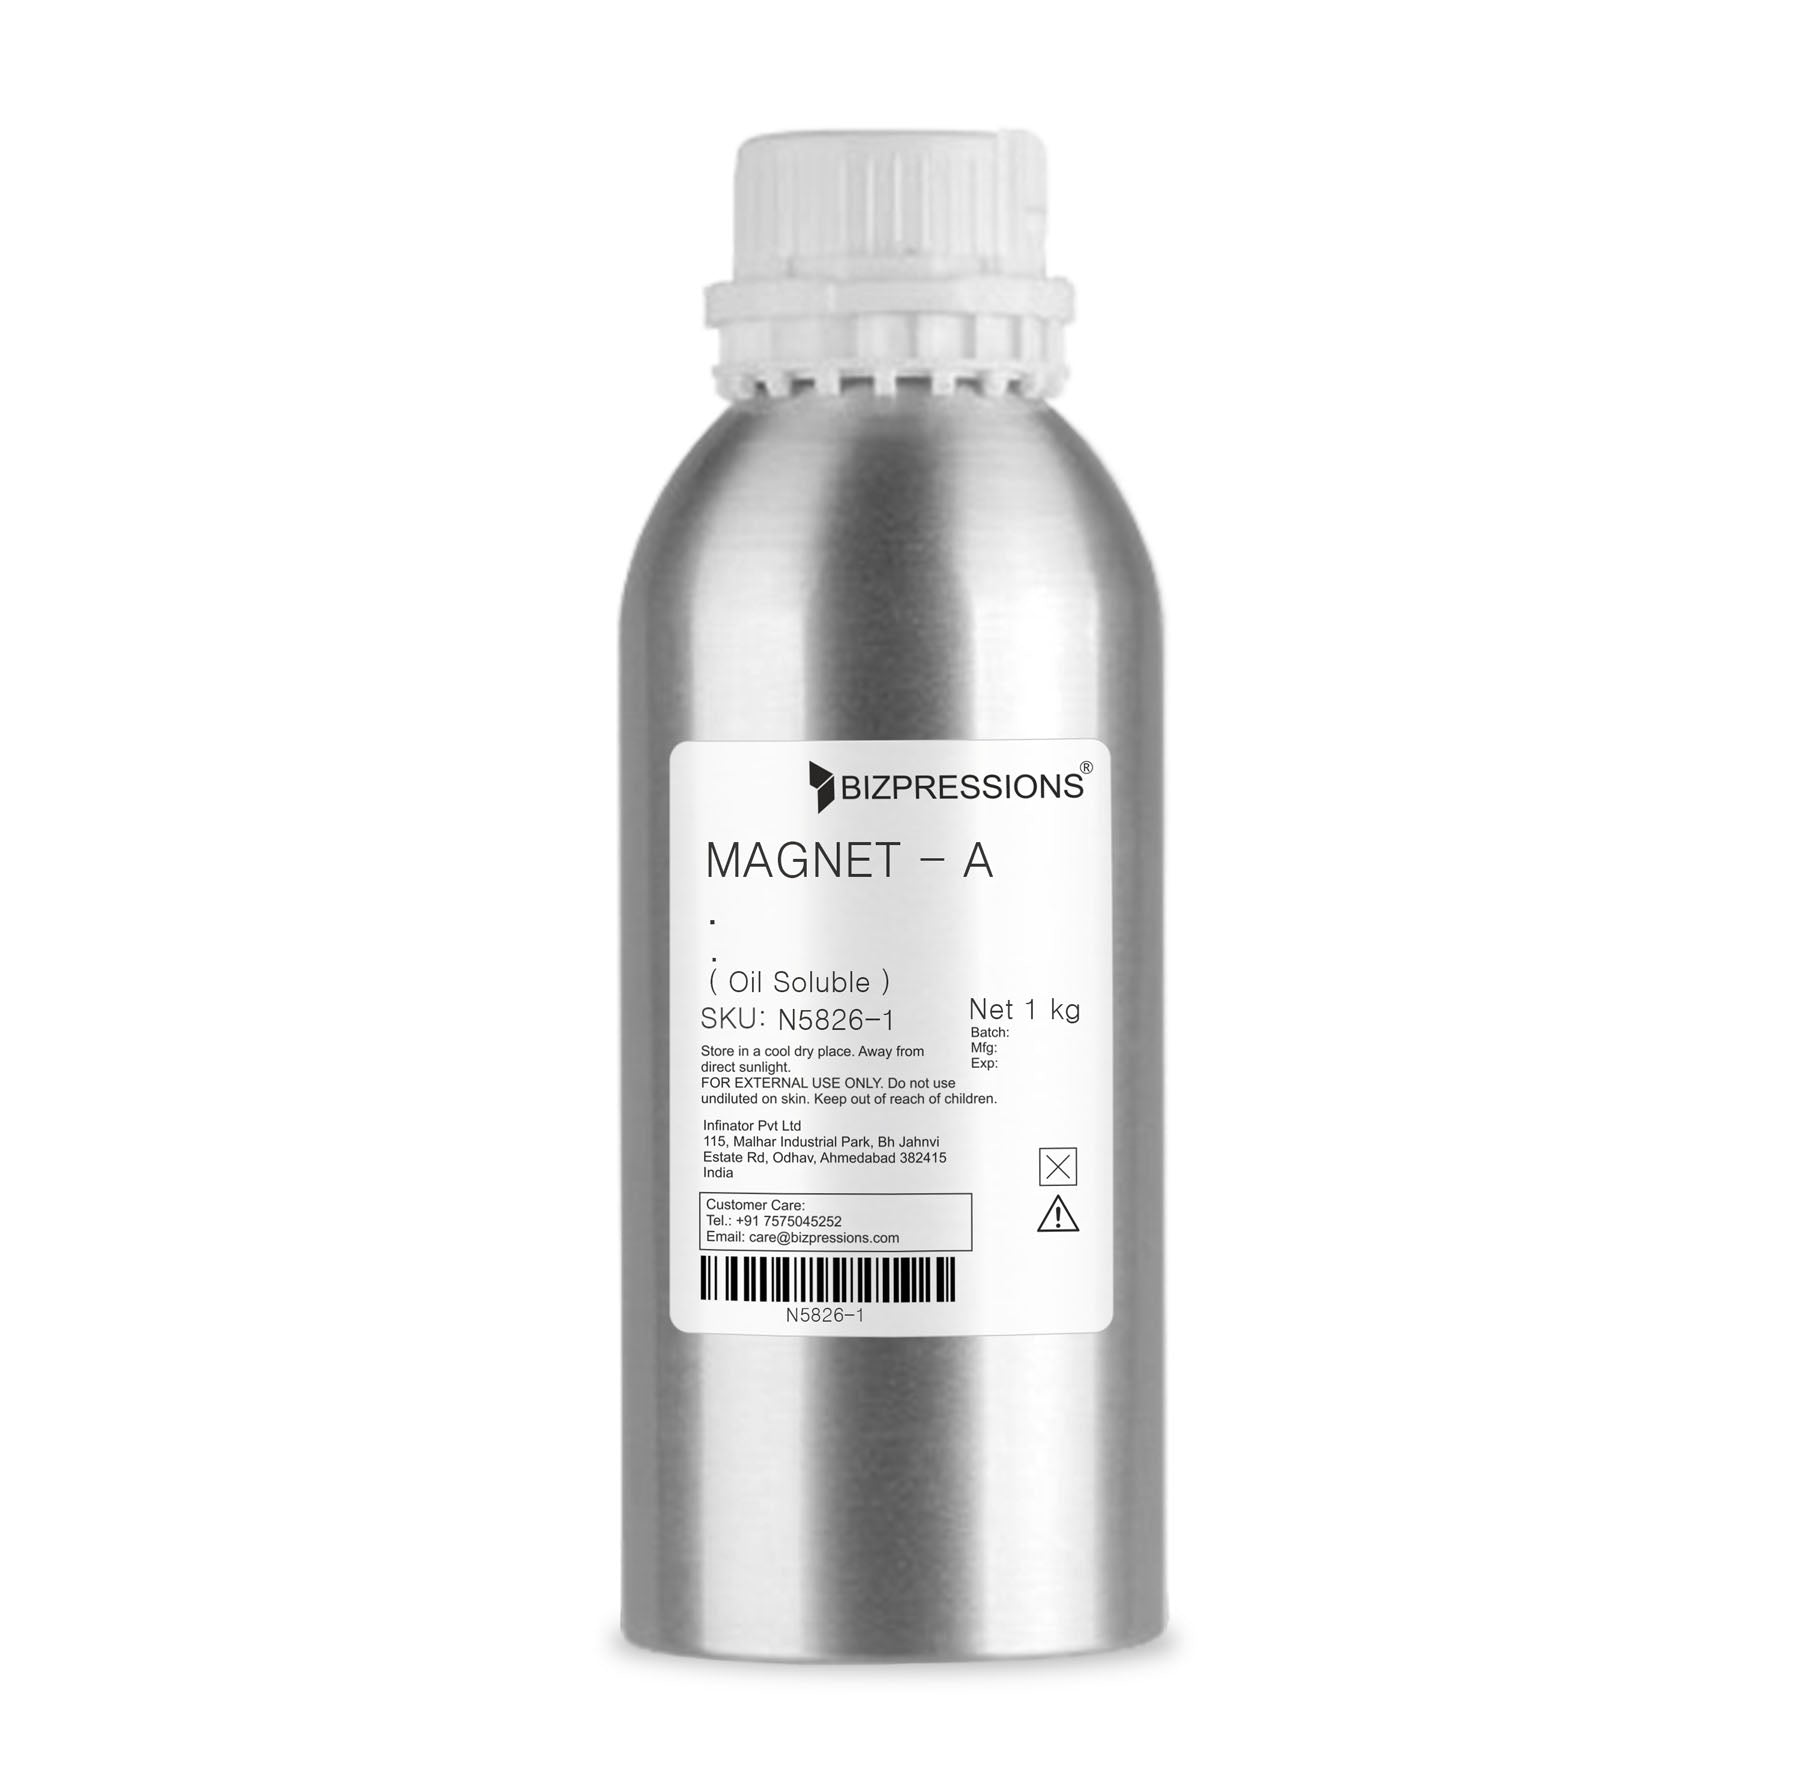 MAGNET - A - Fragrance ( Oil Soluble ) - 1 kg